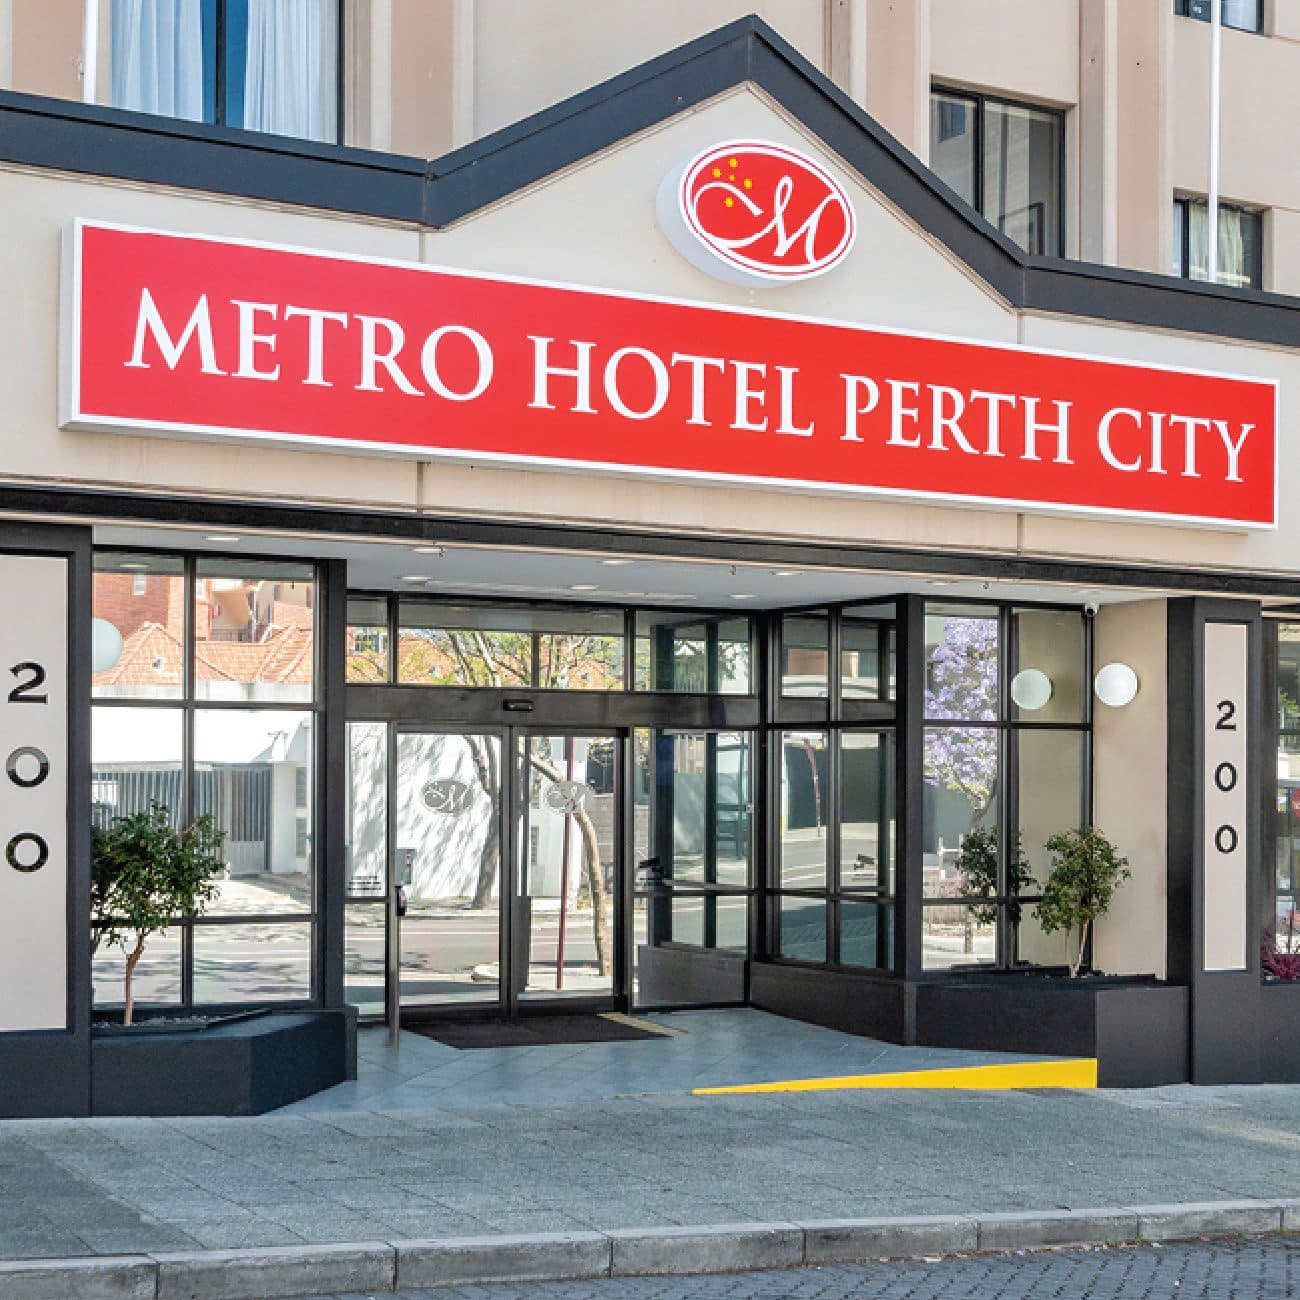 METRO HOTEL PERTH CITY